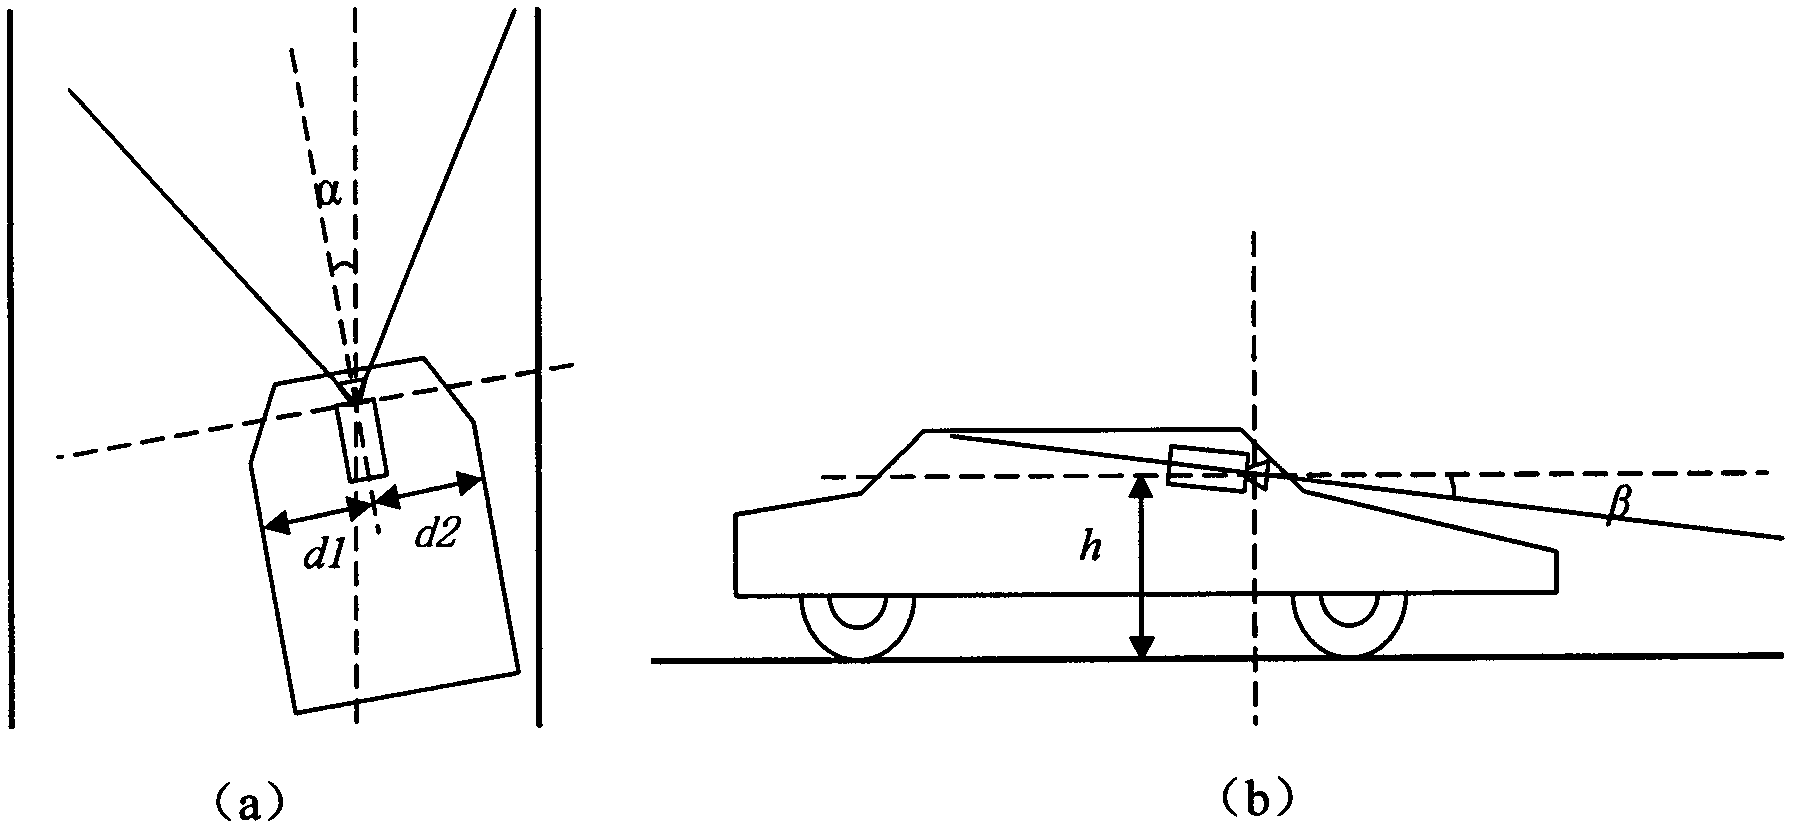 Front vehicle detection method based on monocular vision